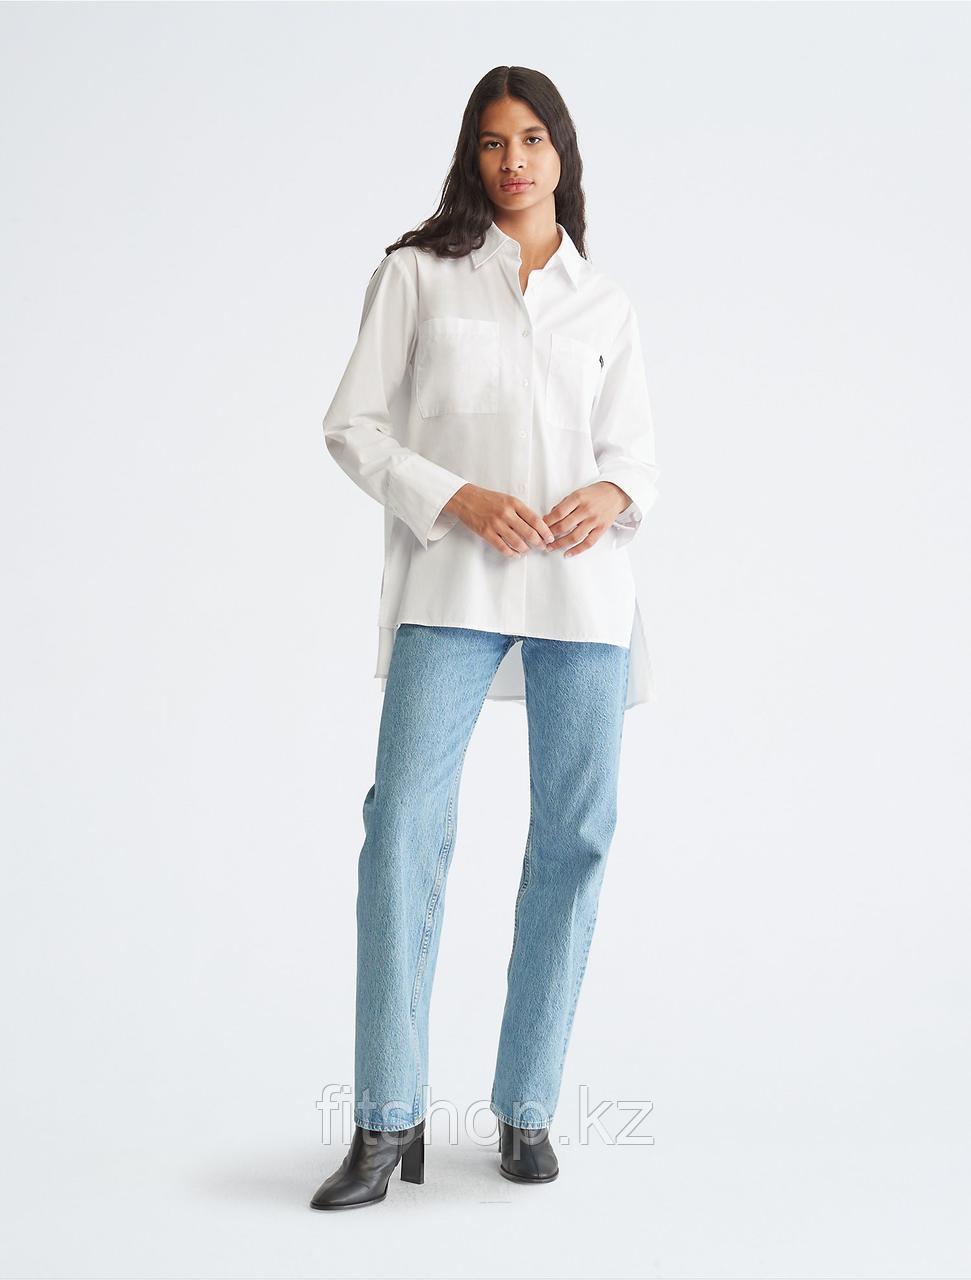 Рубашка женская Calvin klein размер оверсайз от 44 до 50, фото 1